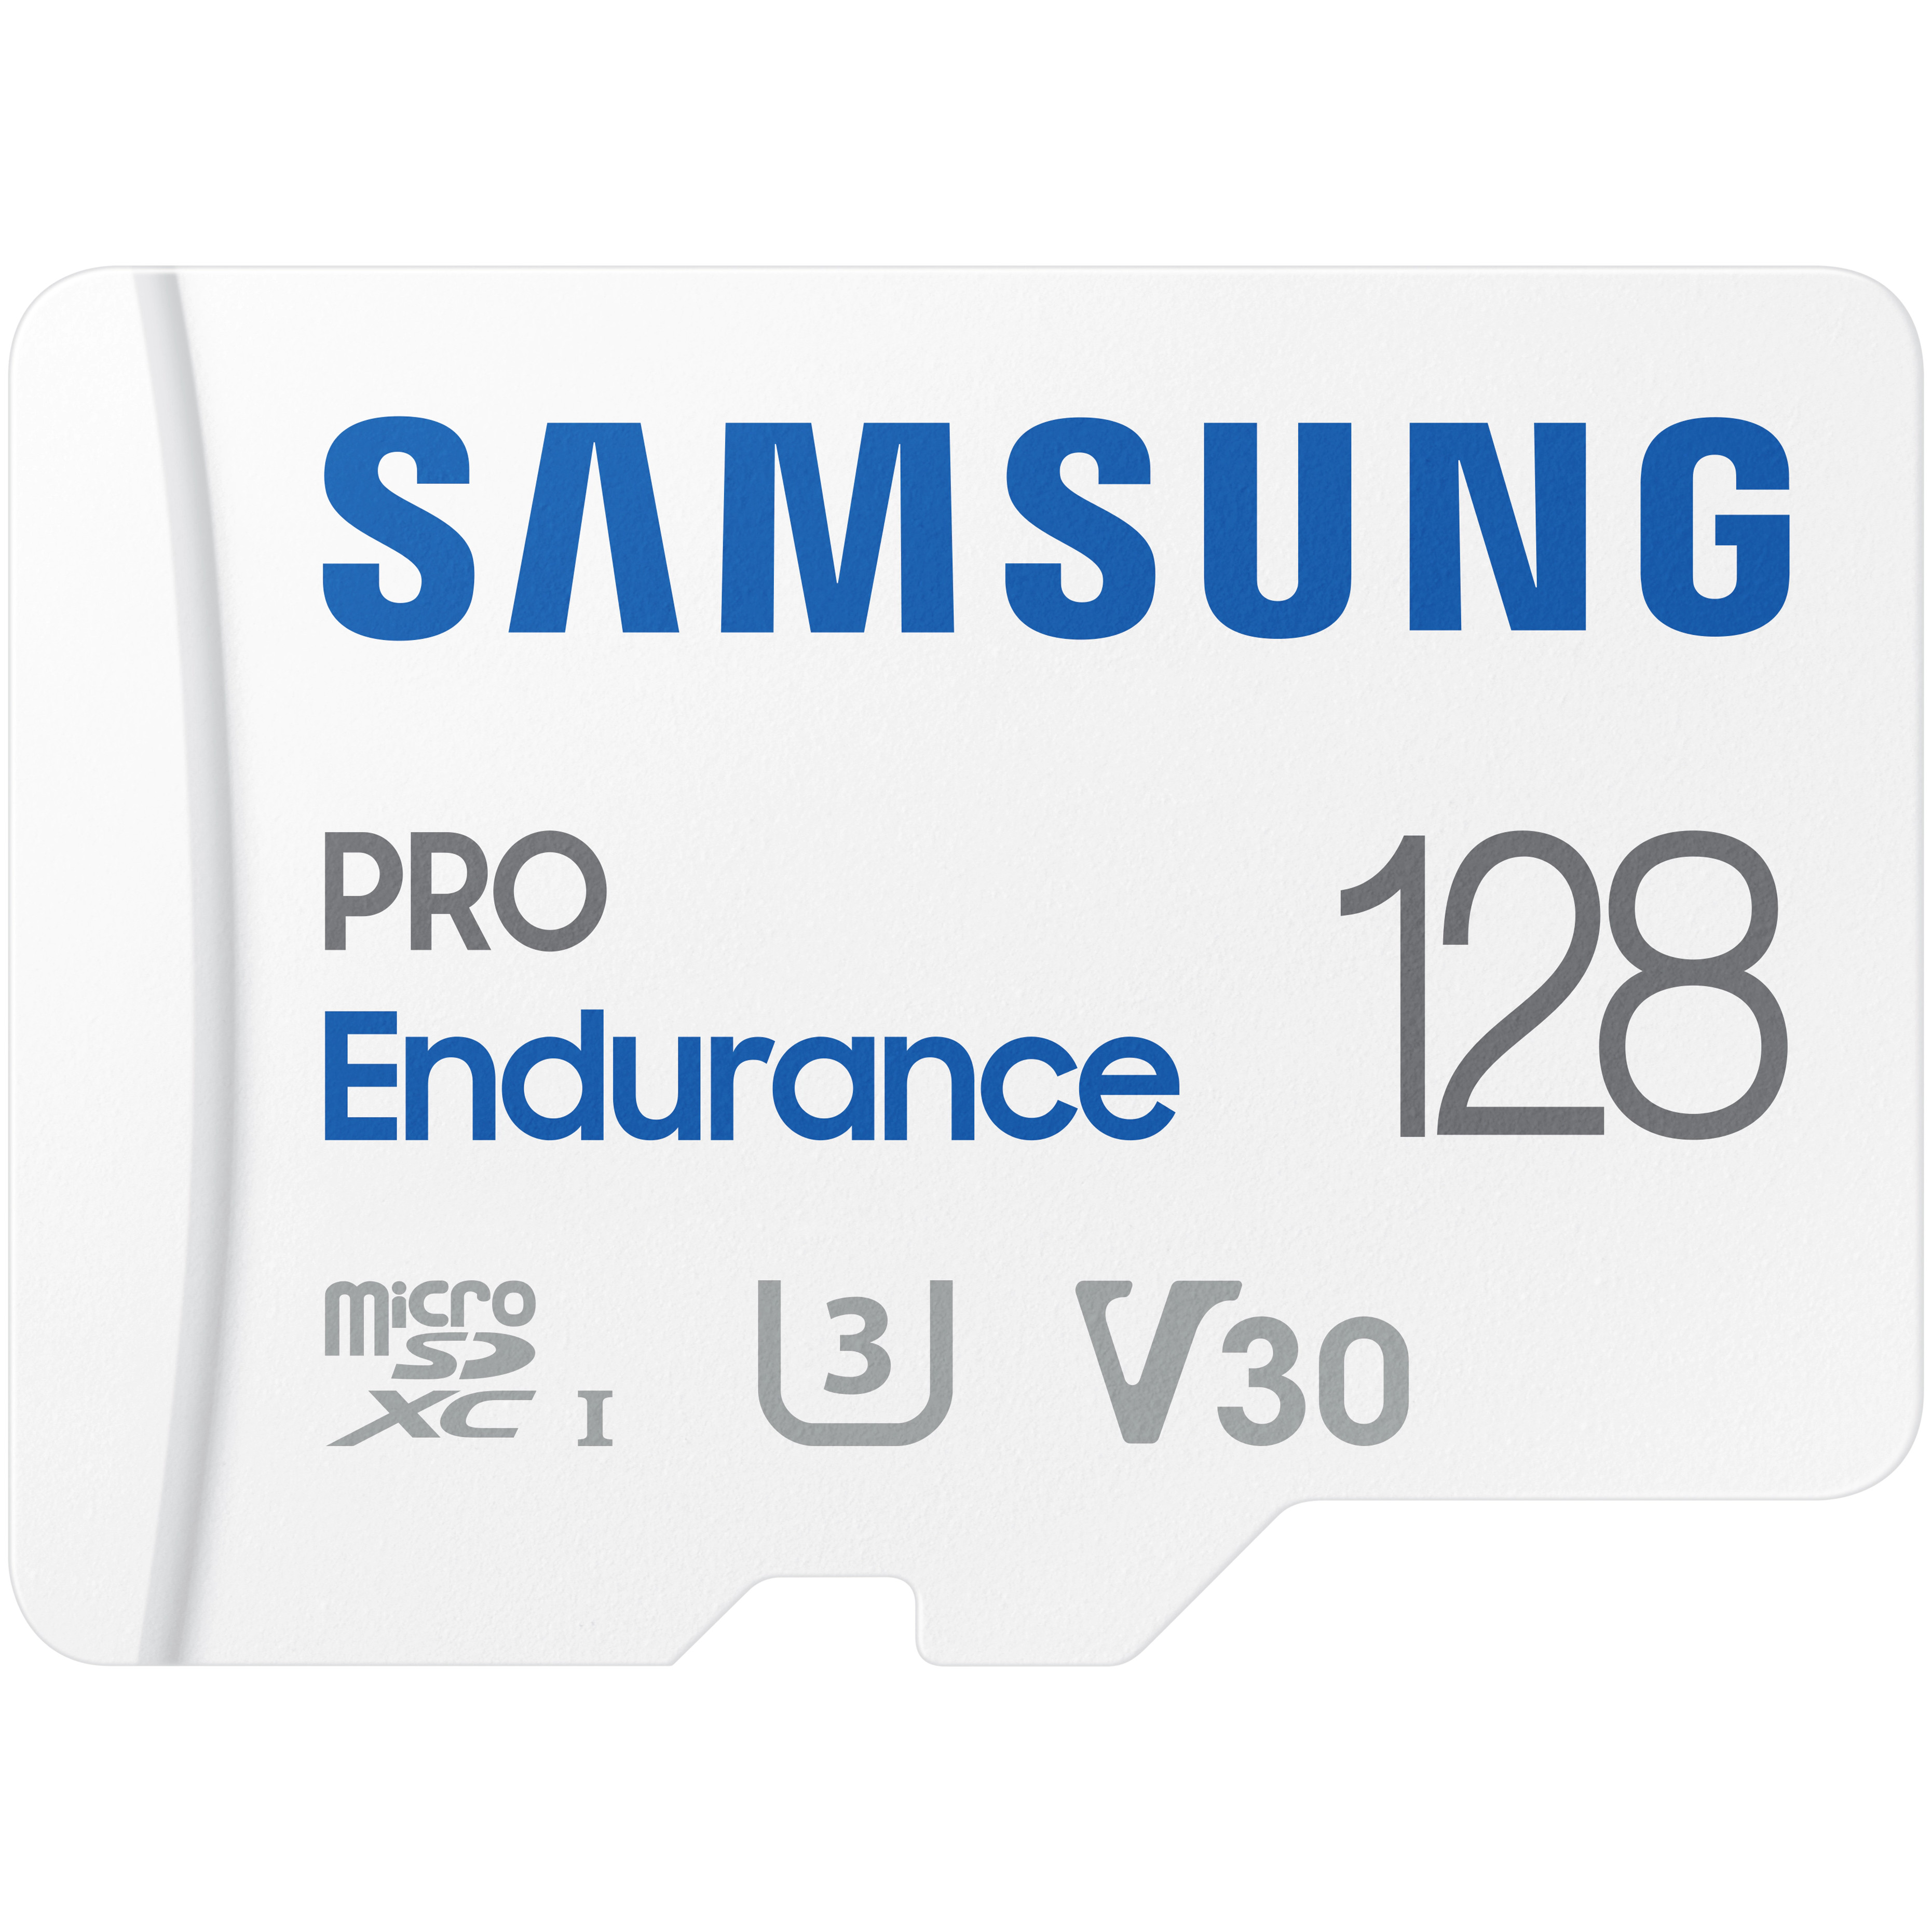 Samsung Pro Endurance microSD kart